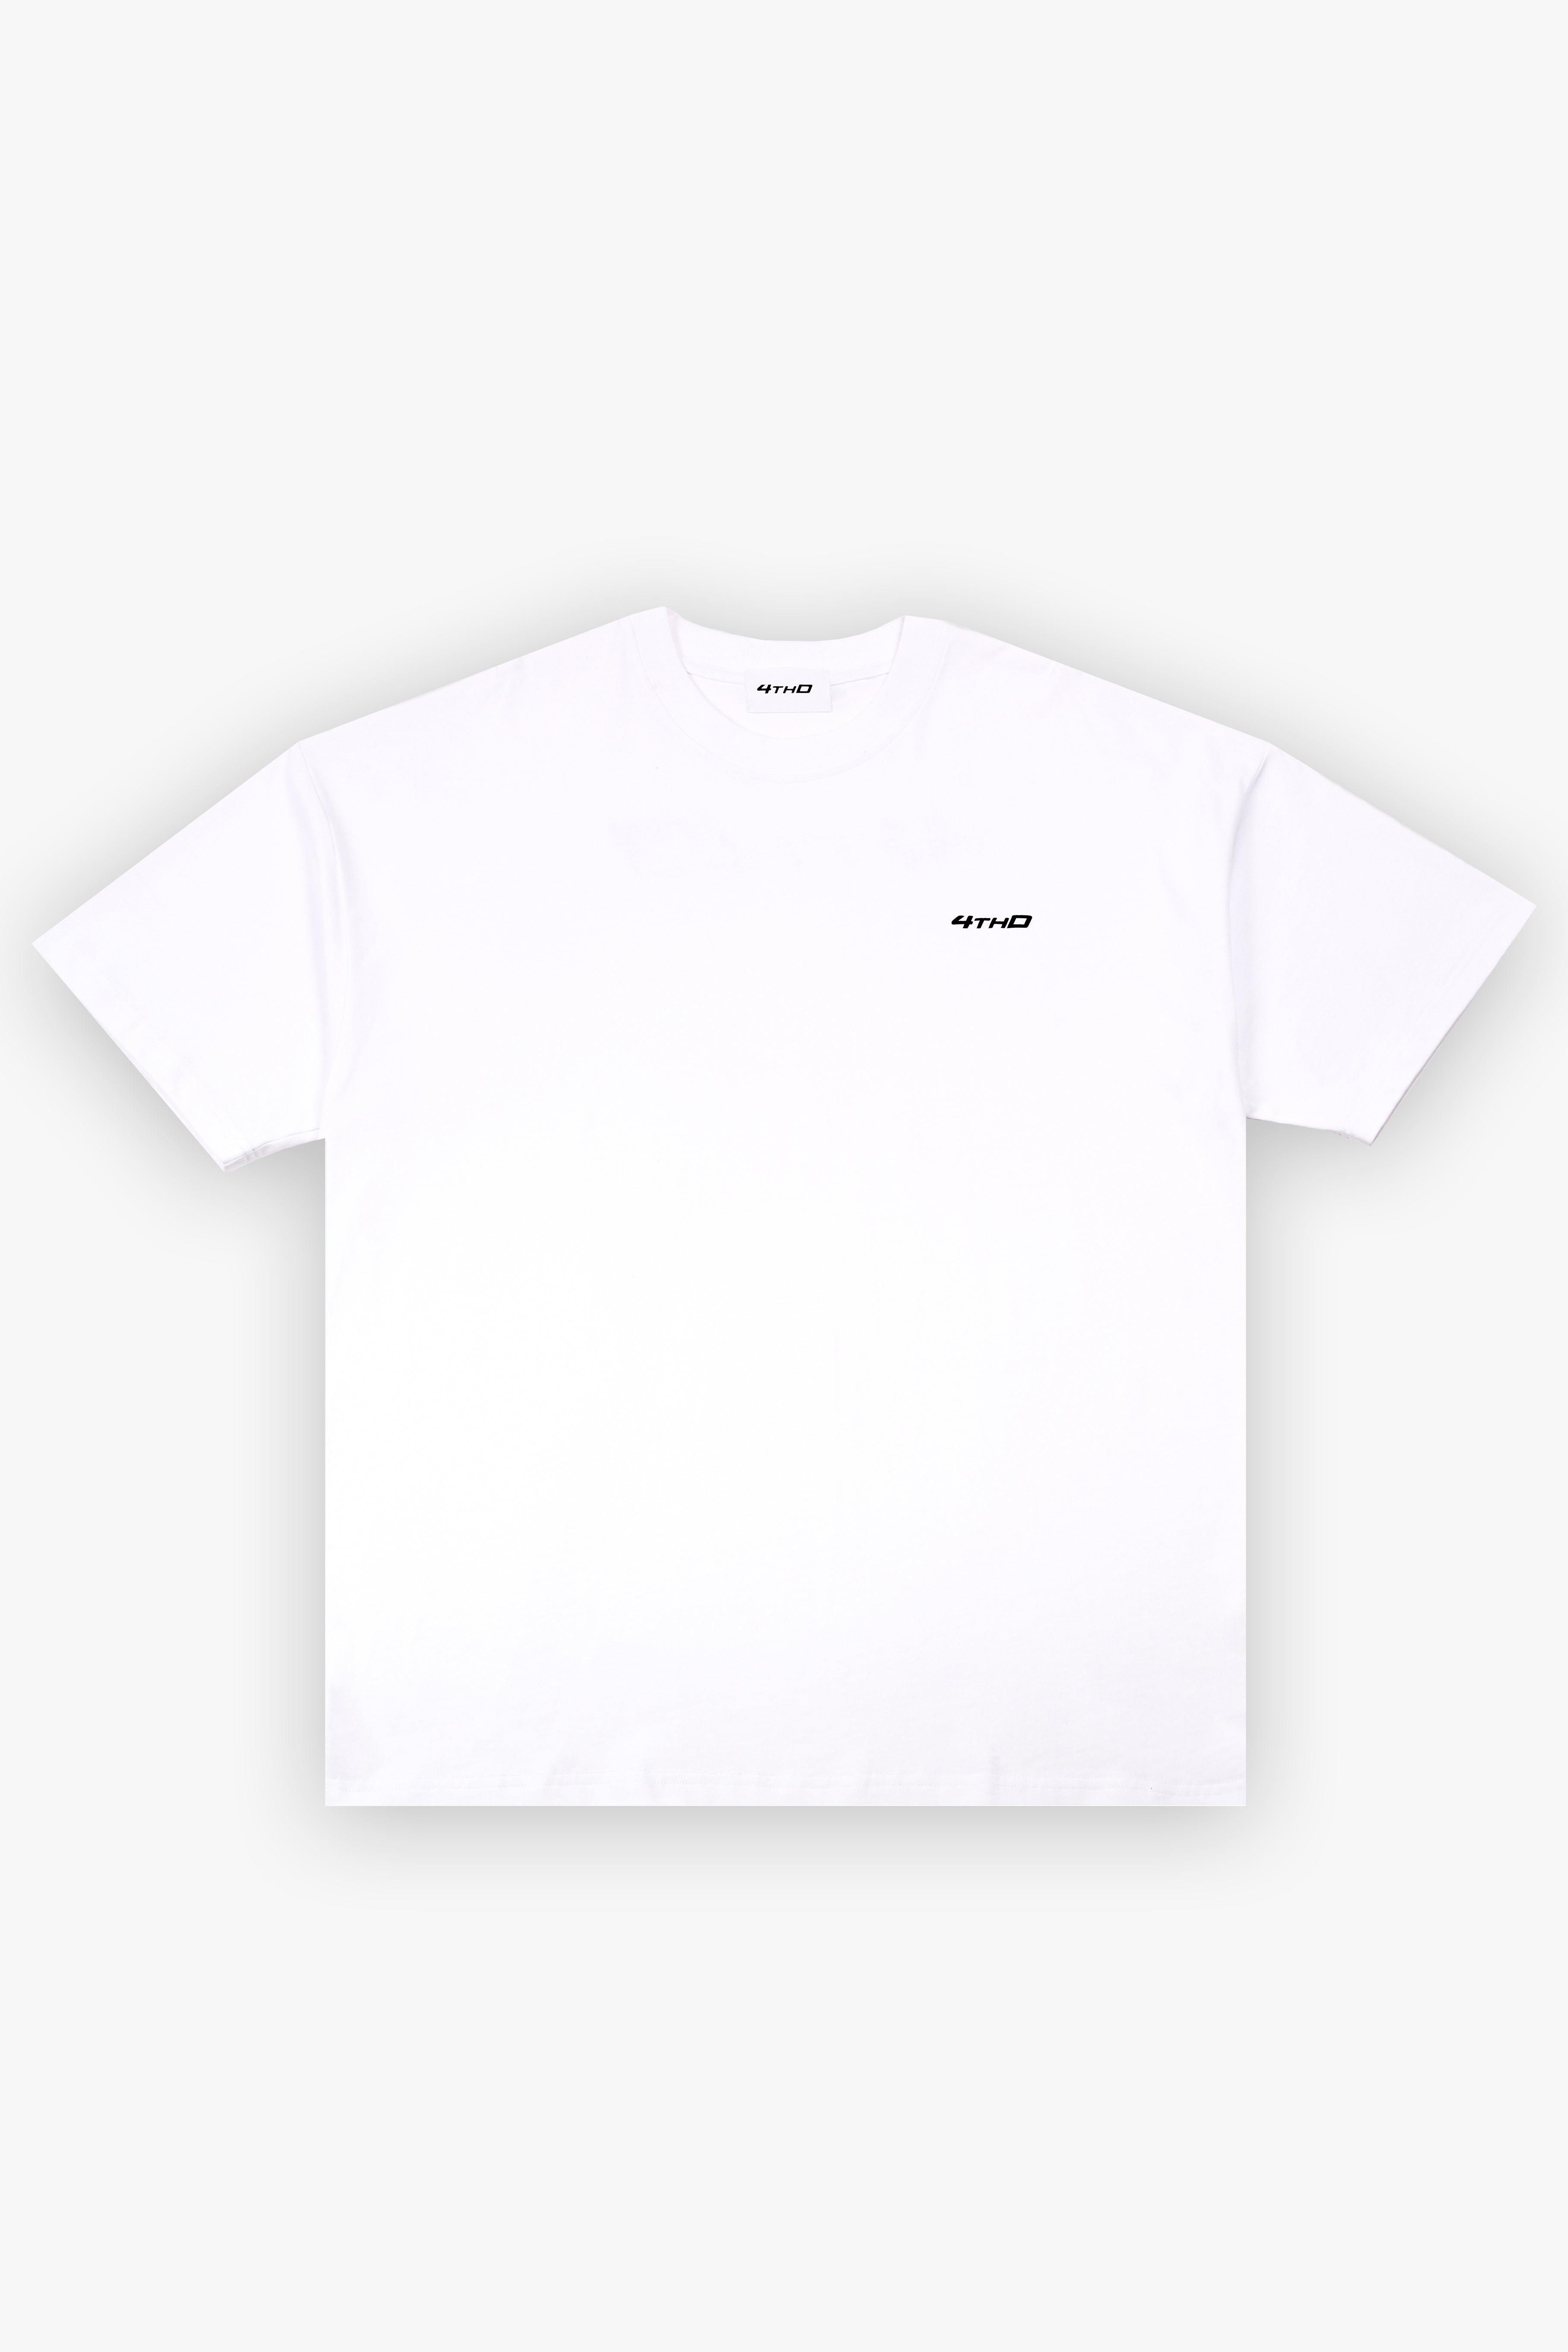 Pantone Shirt - White